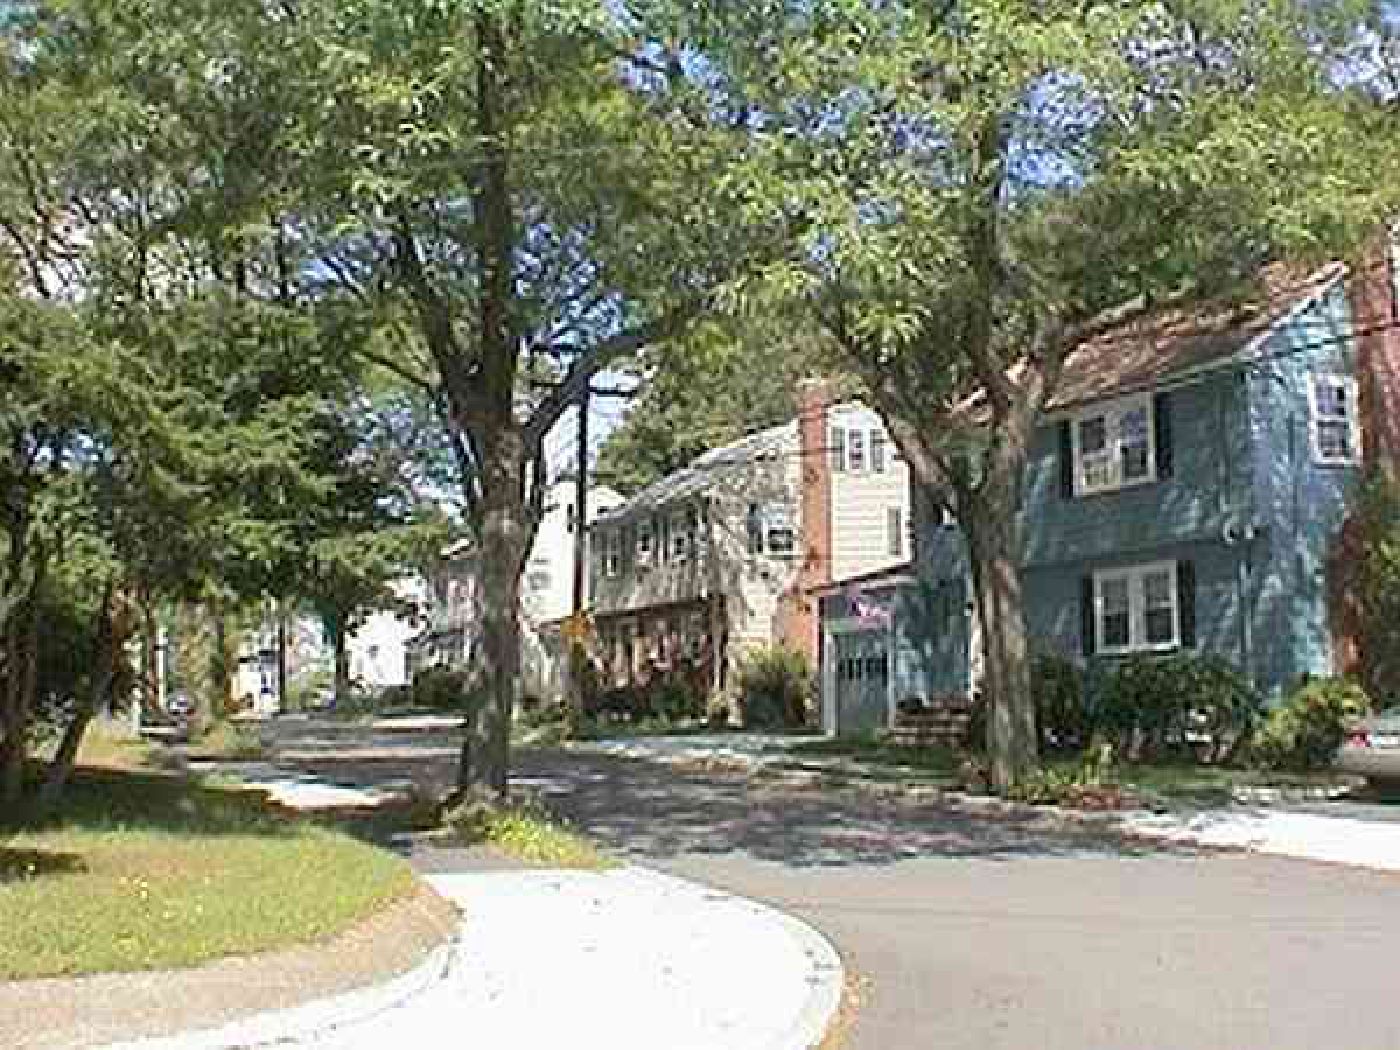 Colonial homes on Range Road, Dorchester, Boston